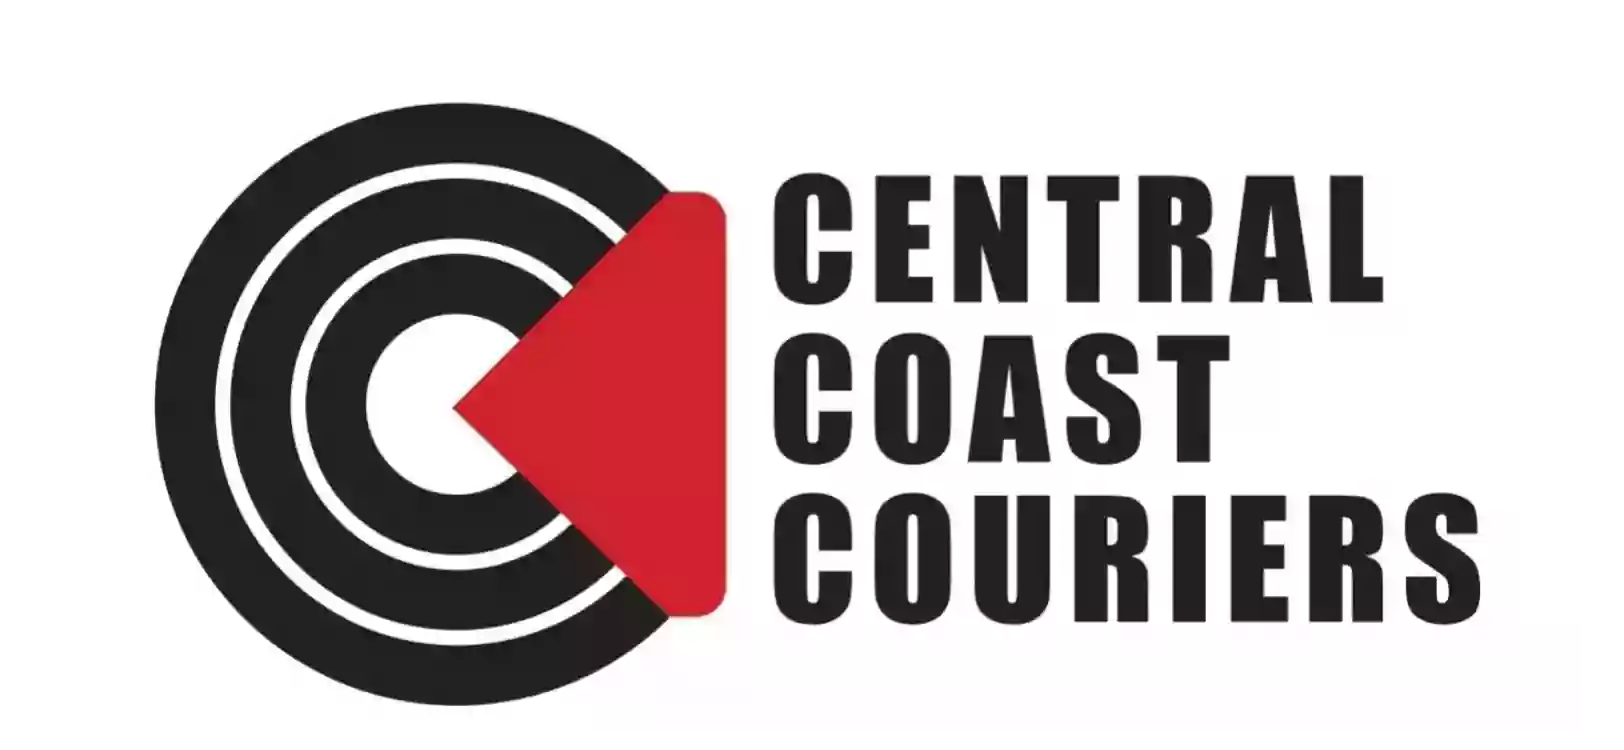 Central Coast Courier Service